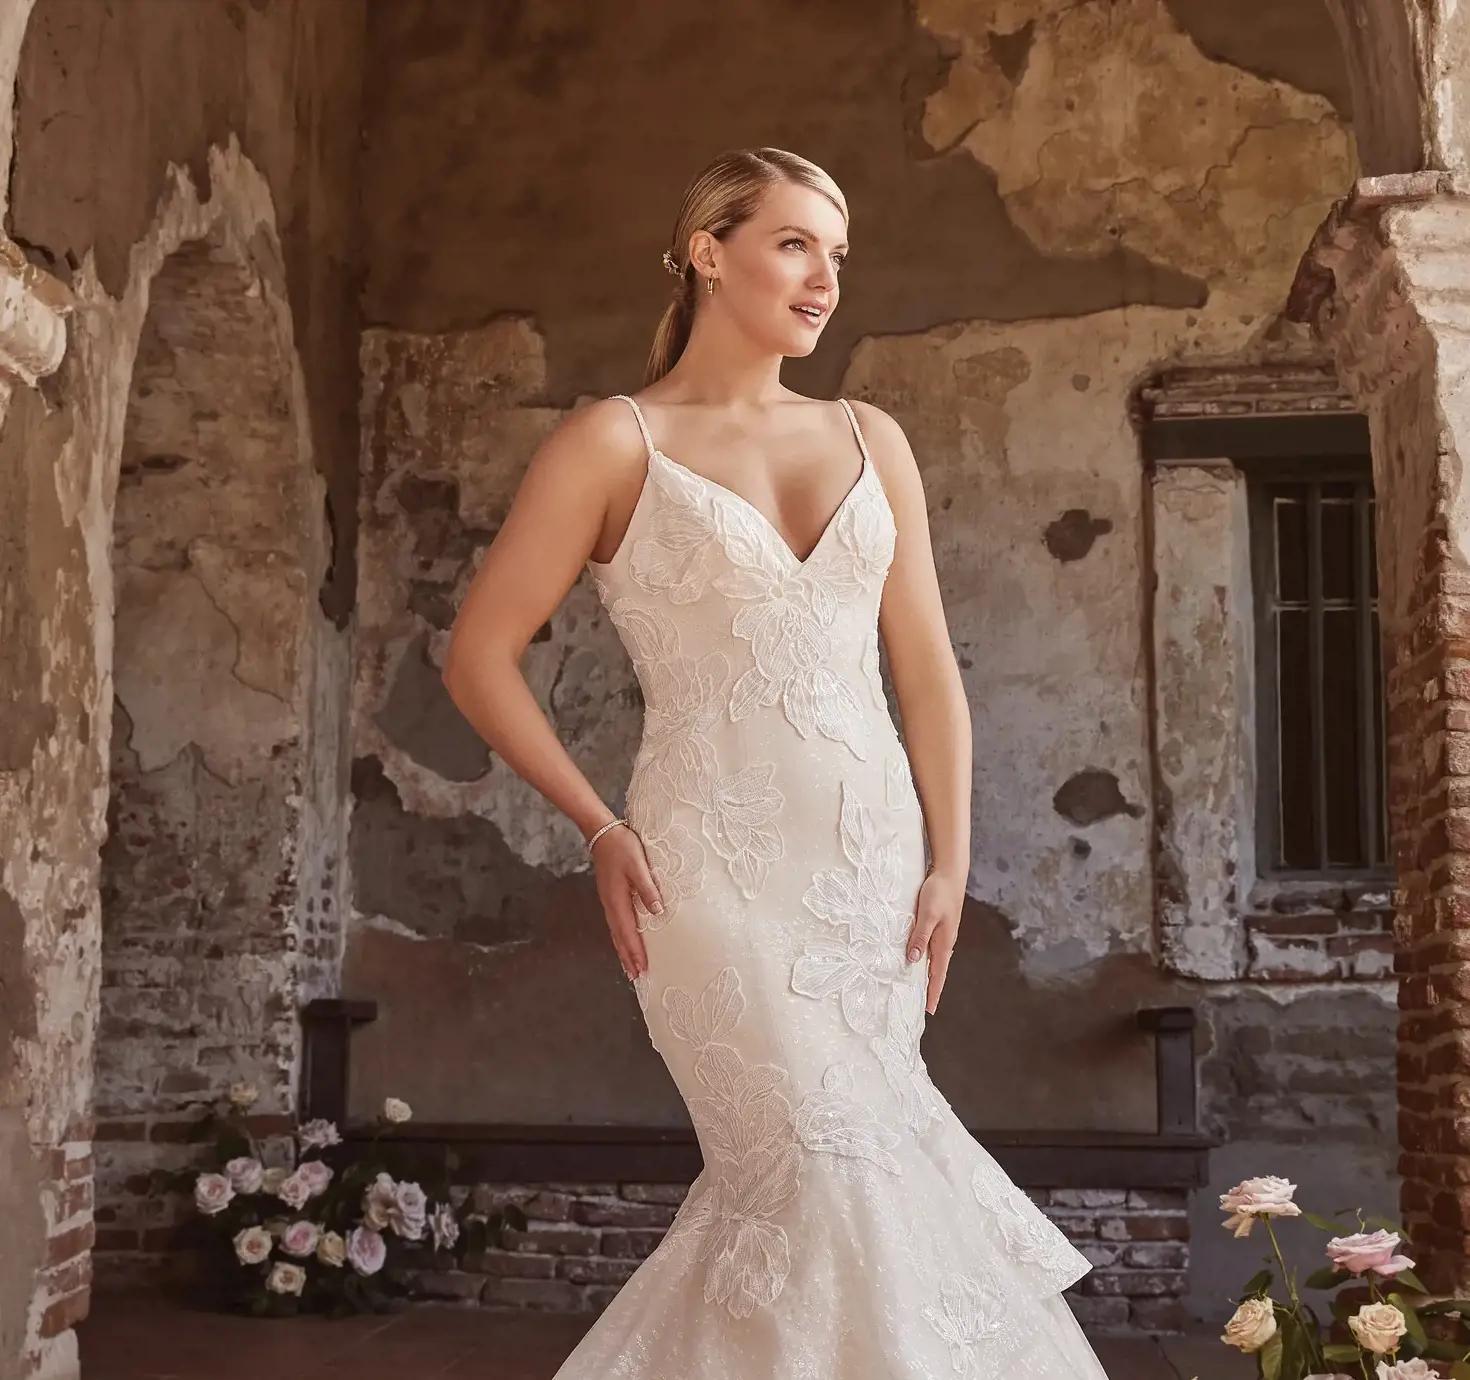 Nontraditional Wedding Dress Textures Image